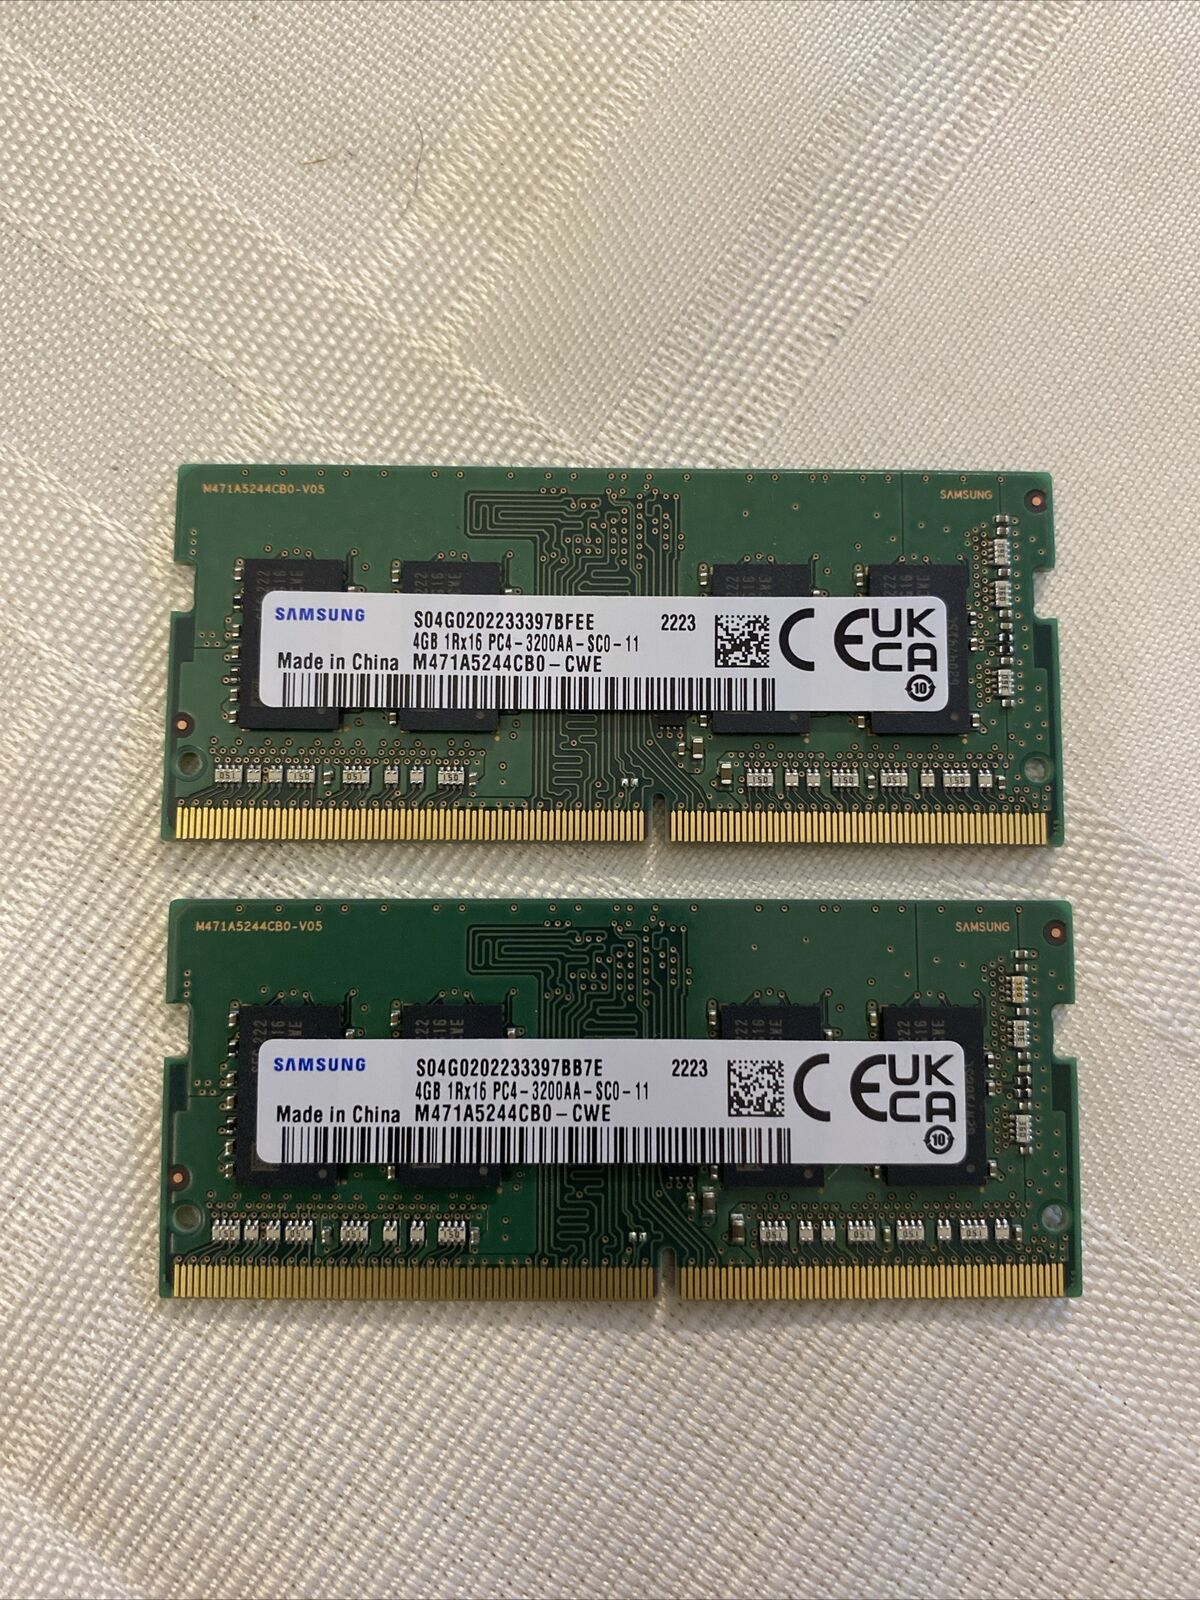 Samsung 8GB (2 x 4GB) Laptop (DDR3 SDRAM) Memory C21